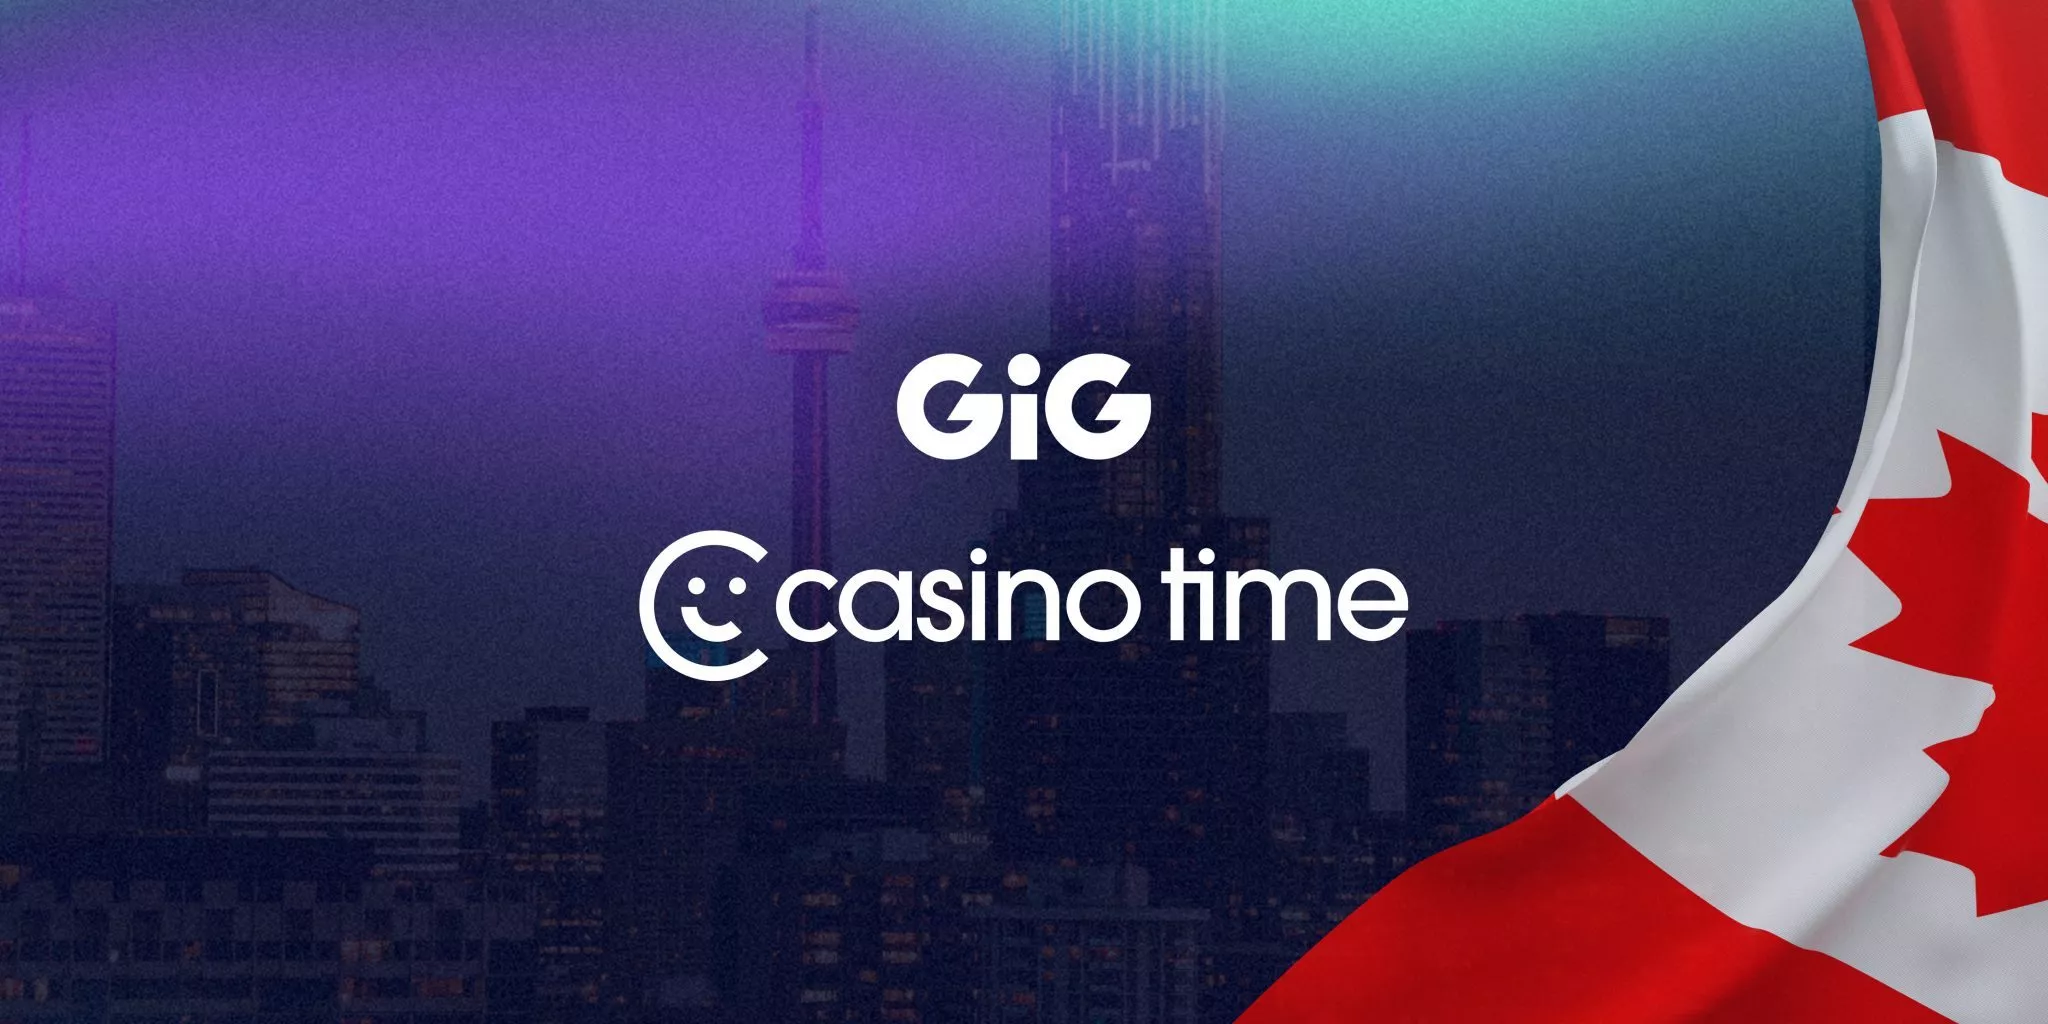 gig-casino-time-logos-partnership